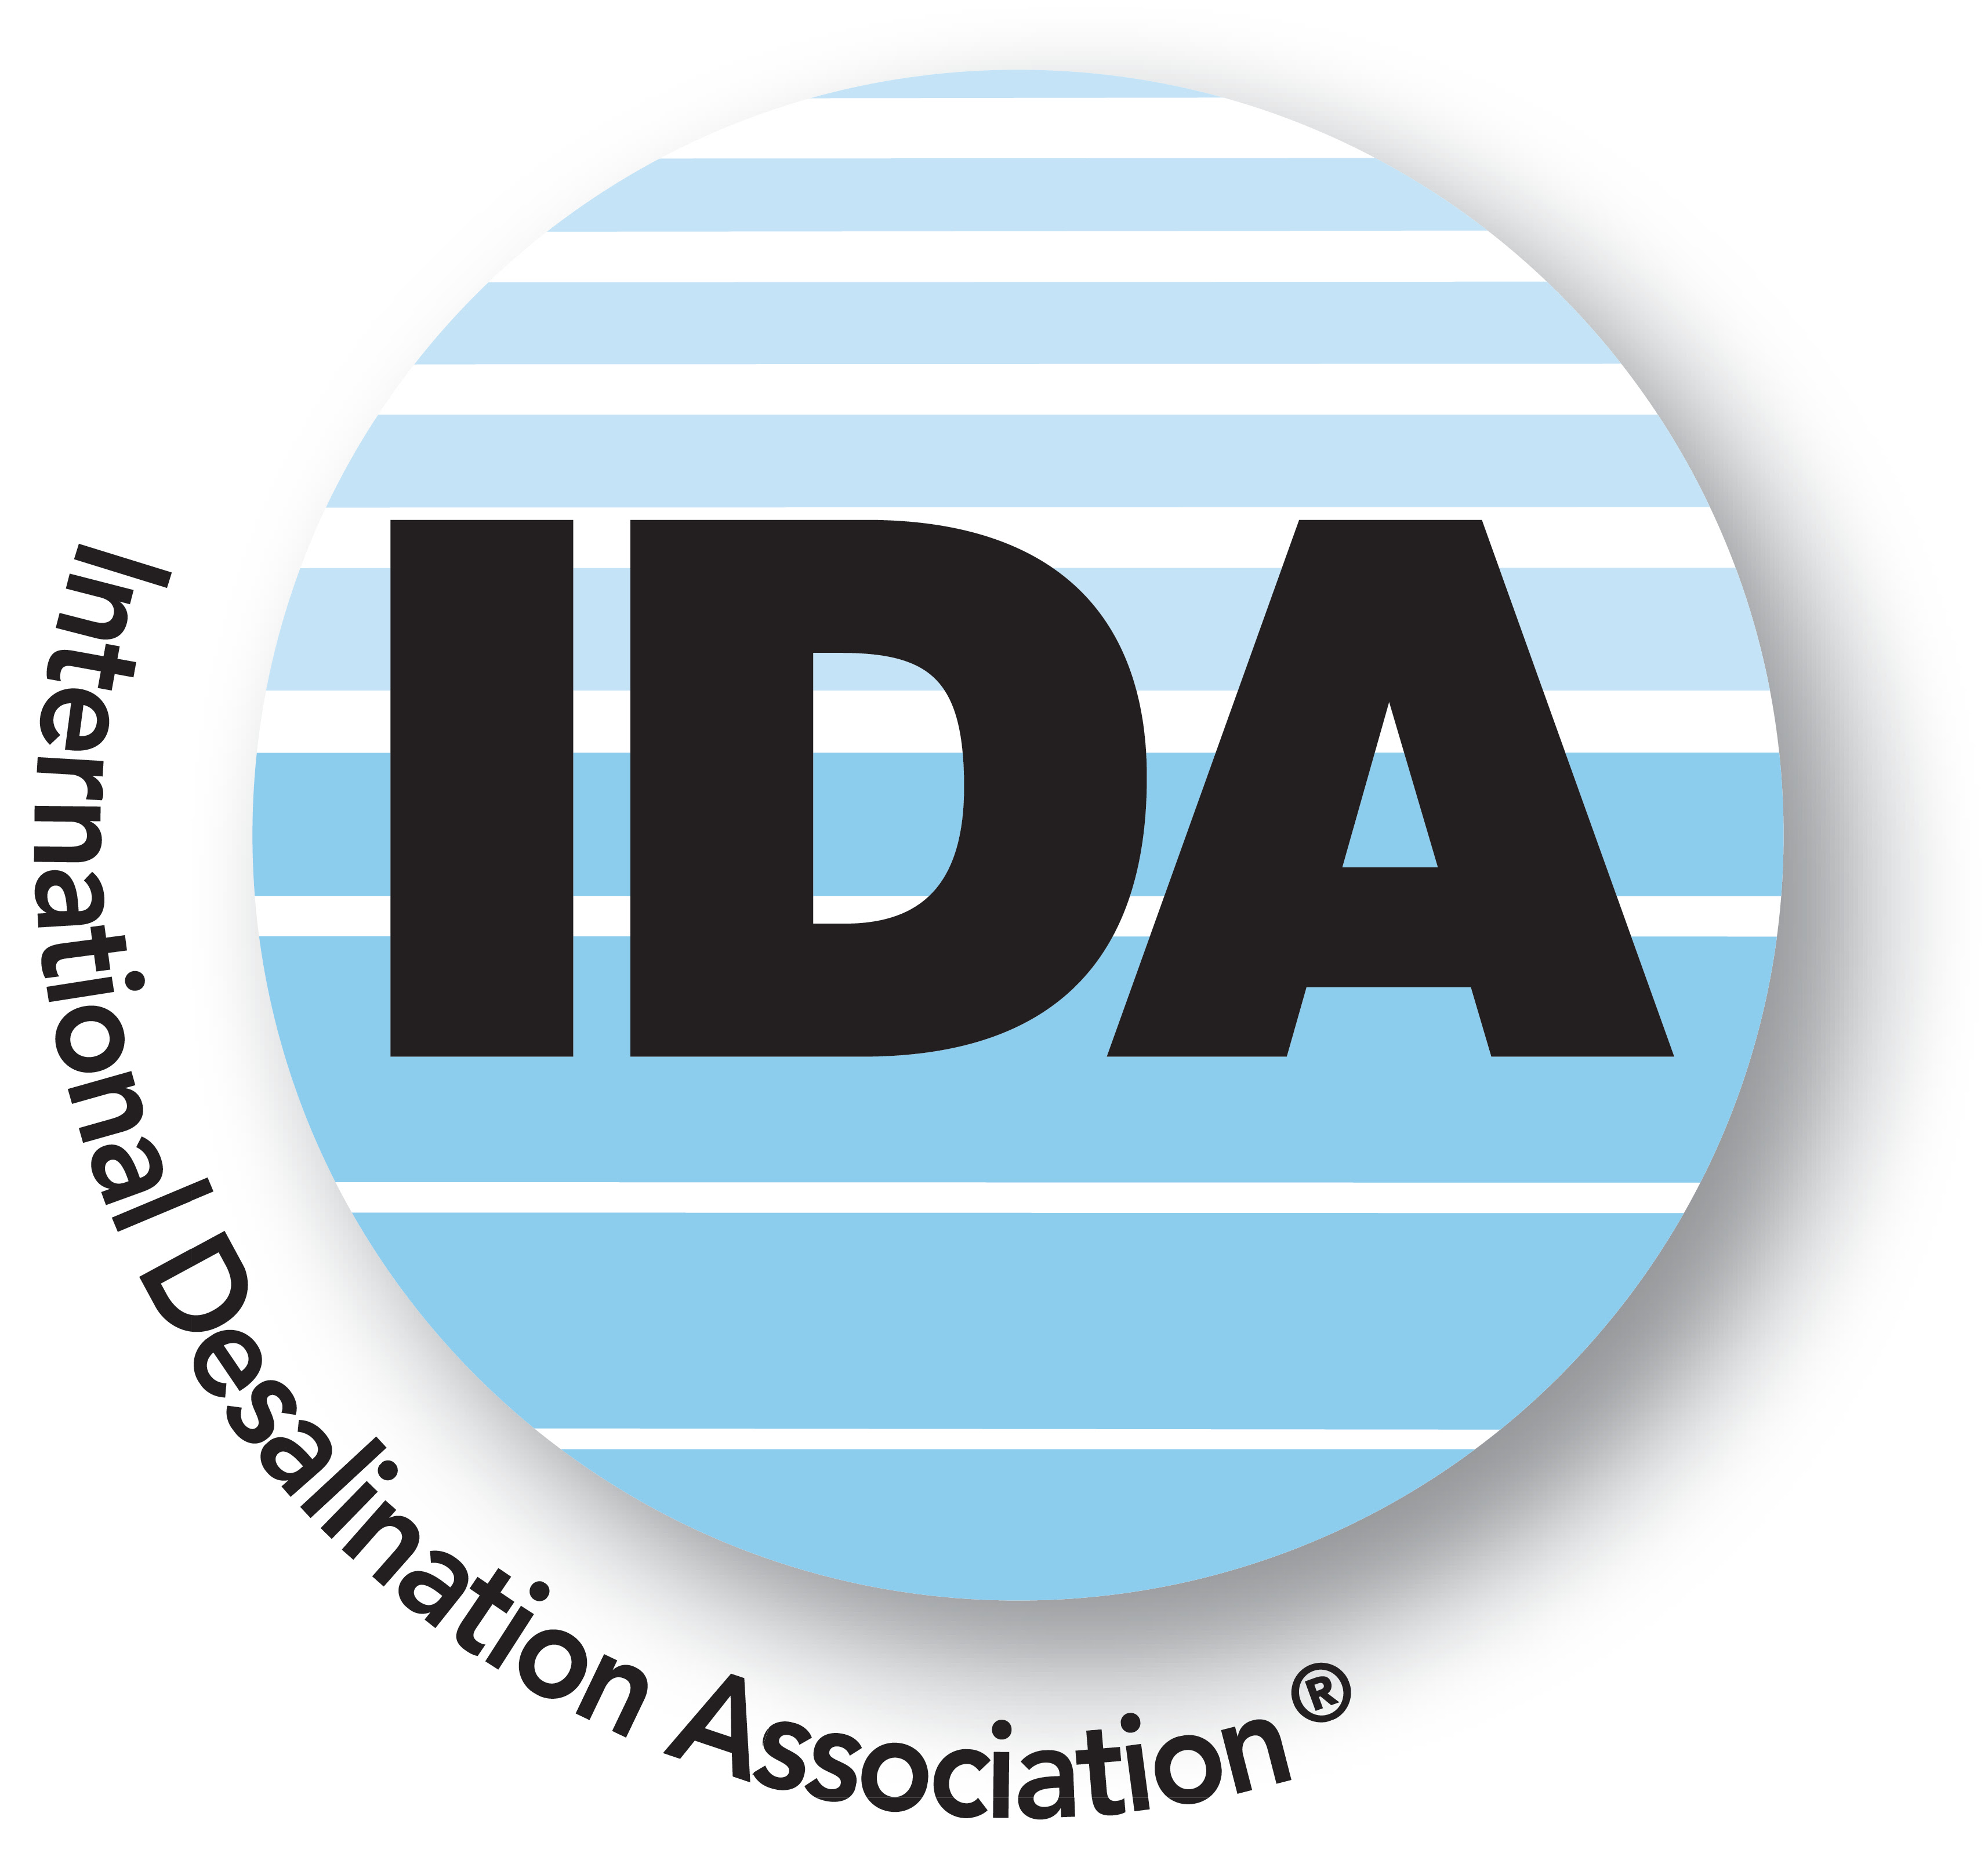 Dr Adriana Marais will make the keynote address at the IDA World Congress.